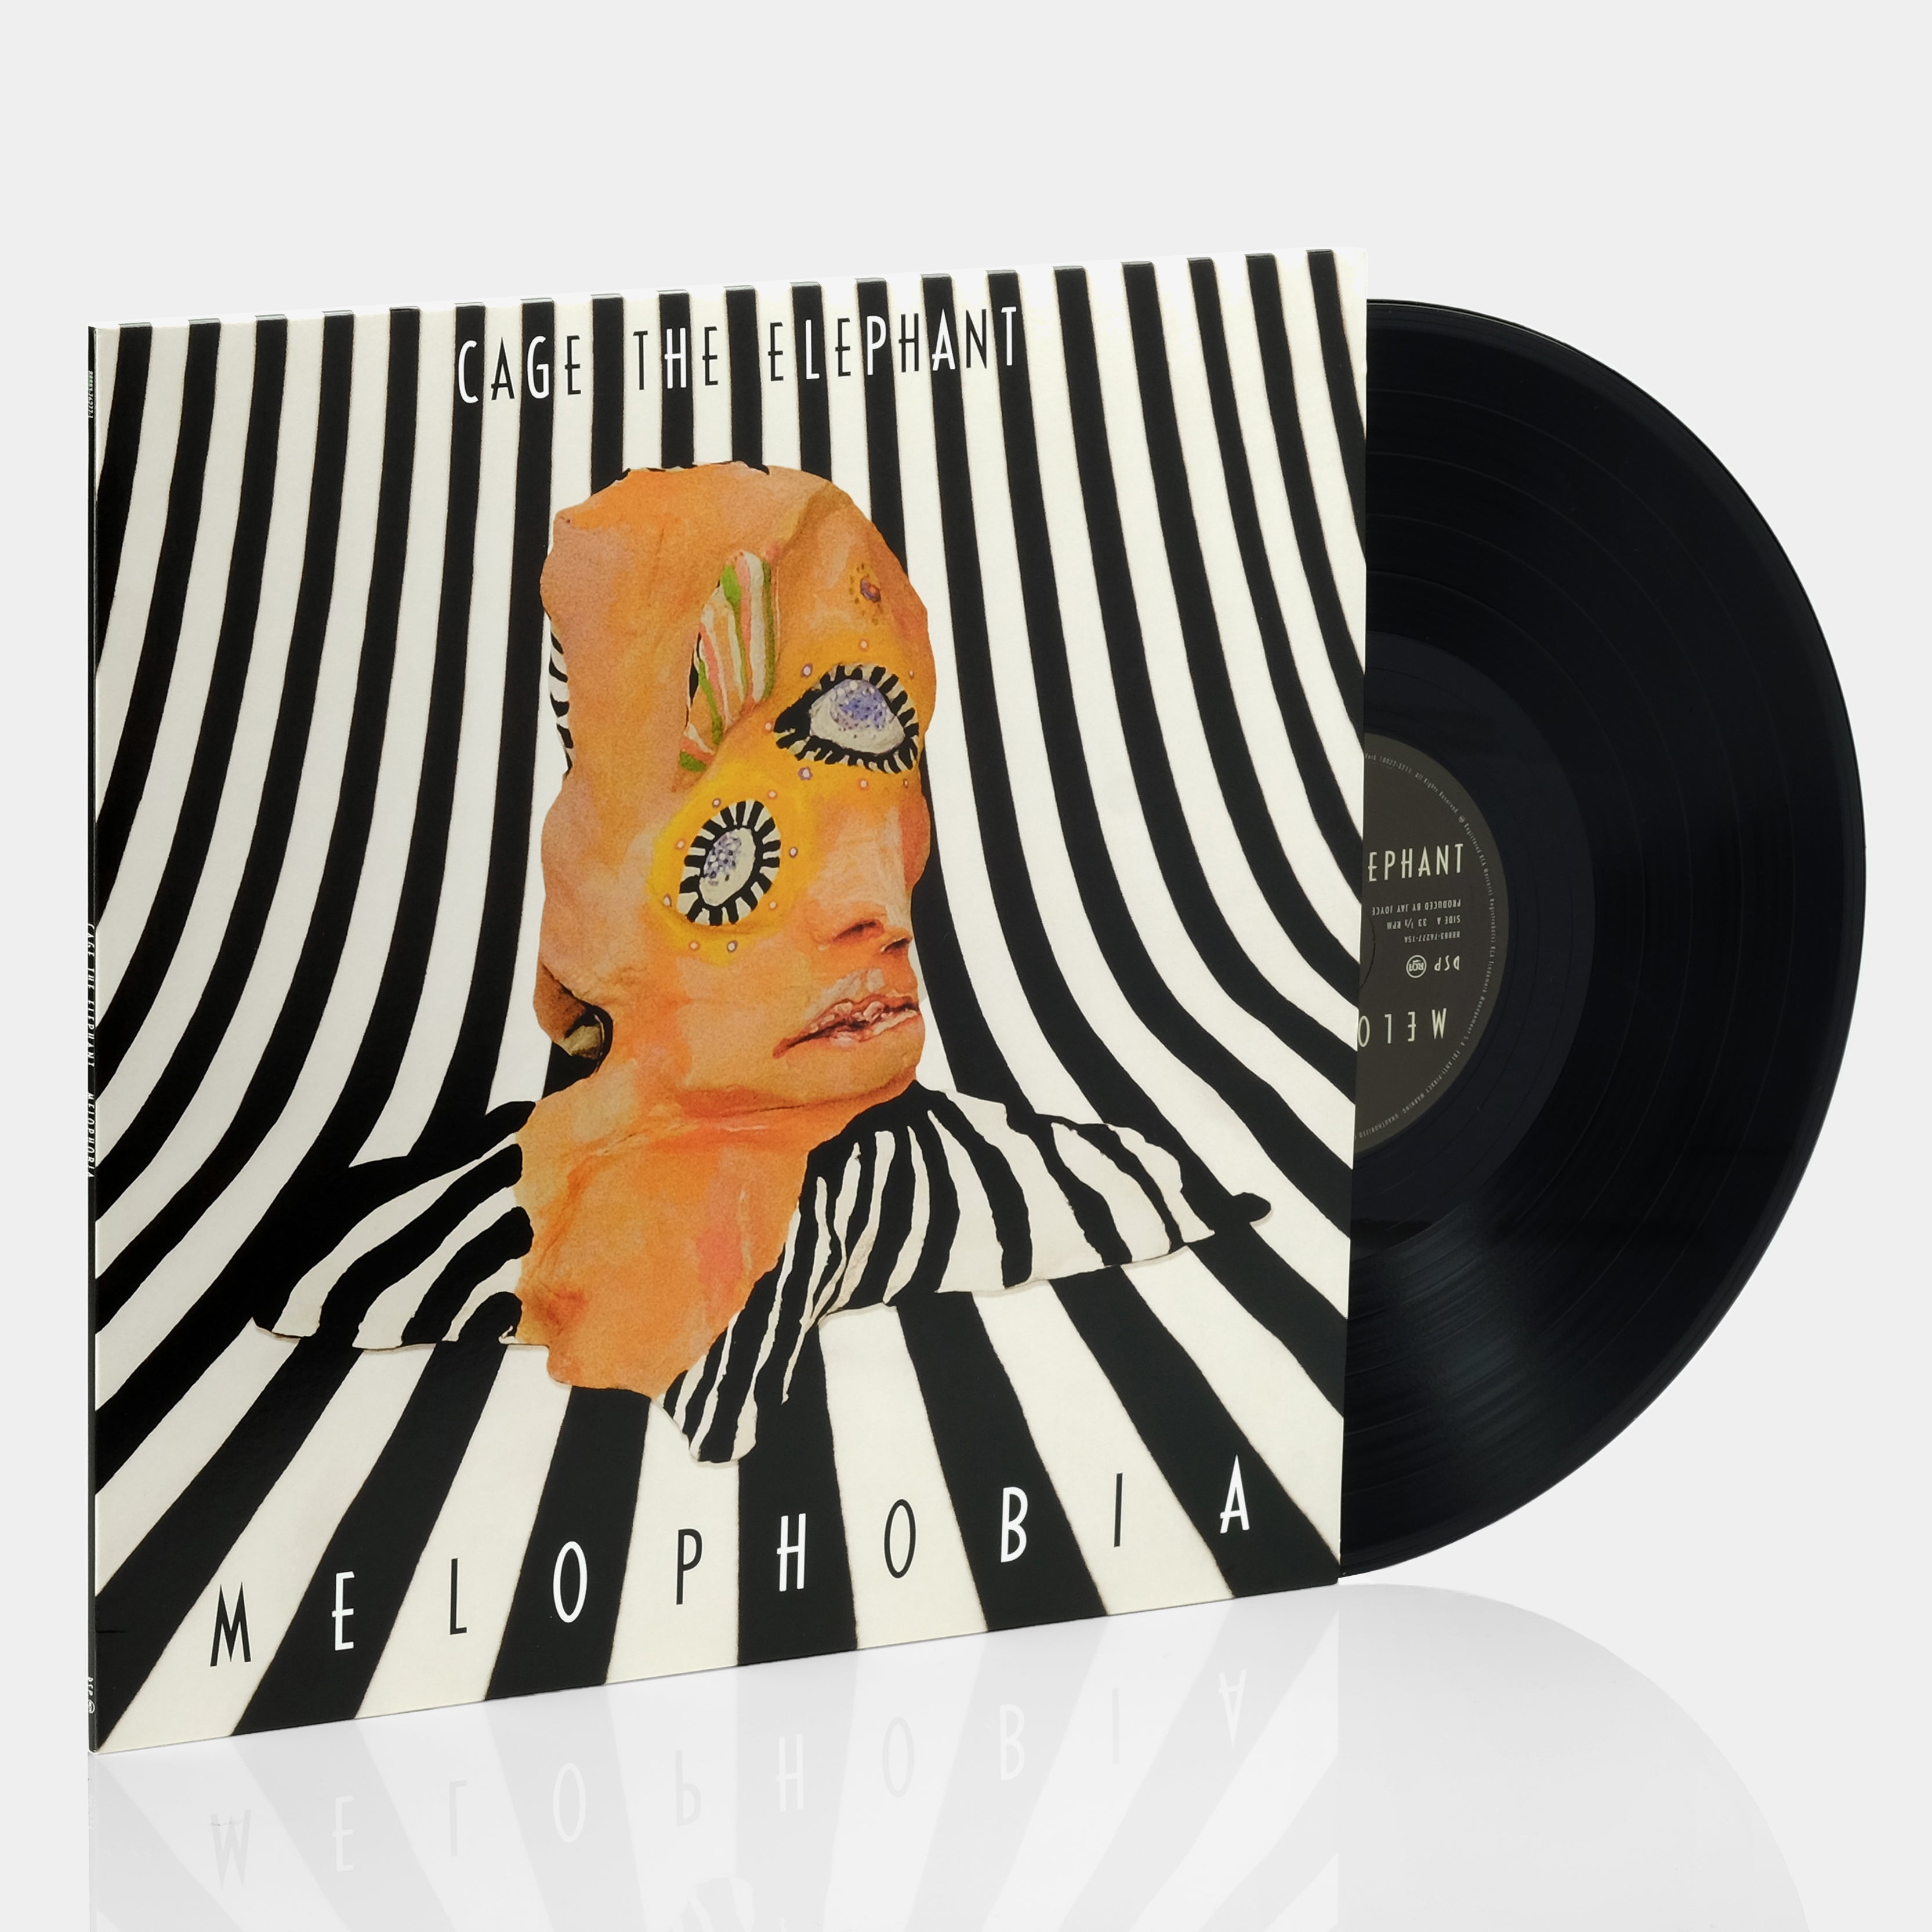 Cage The Elephant - Melophobia LP Vinyl Record